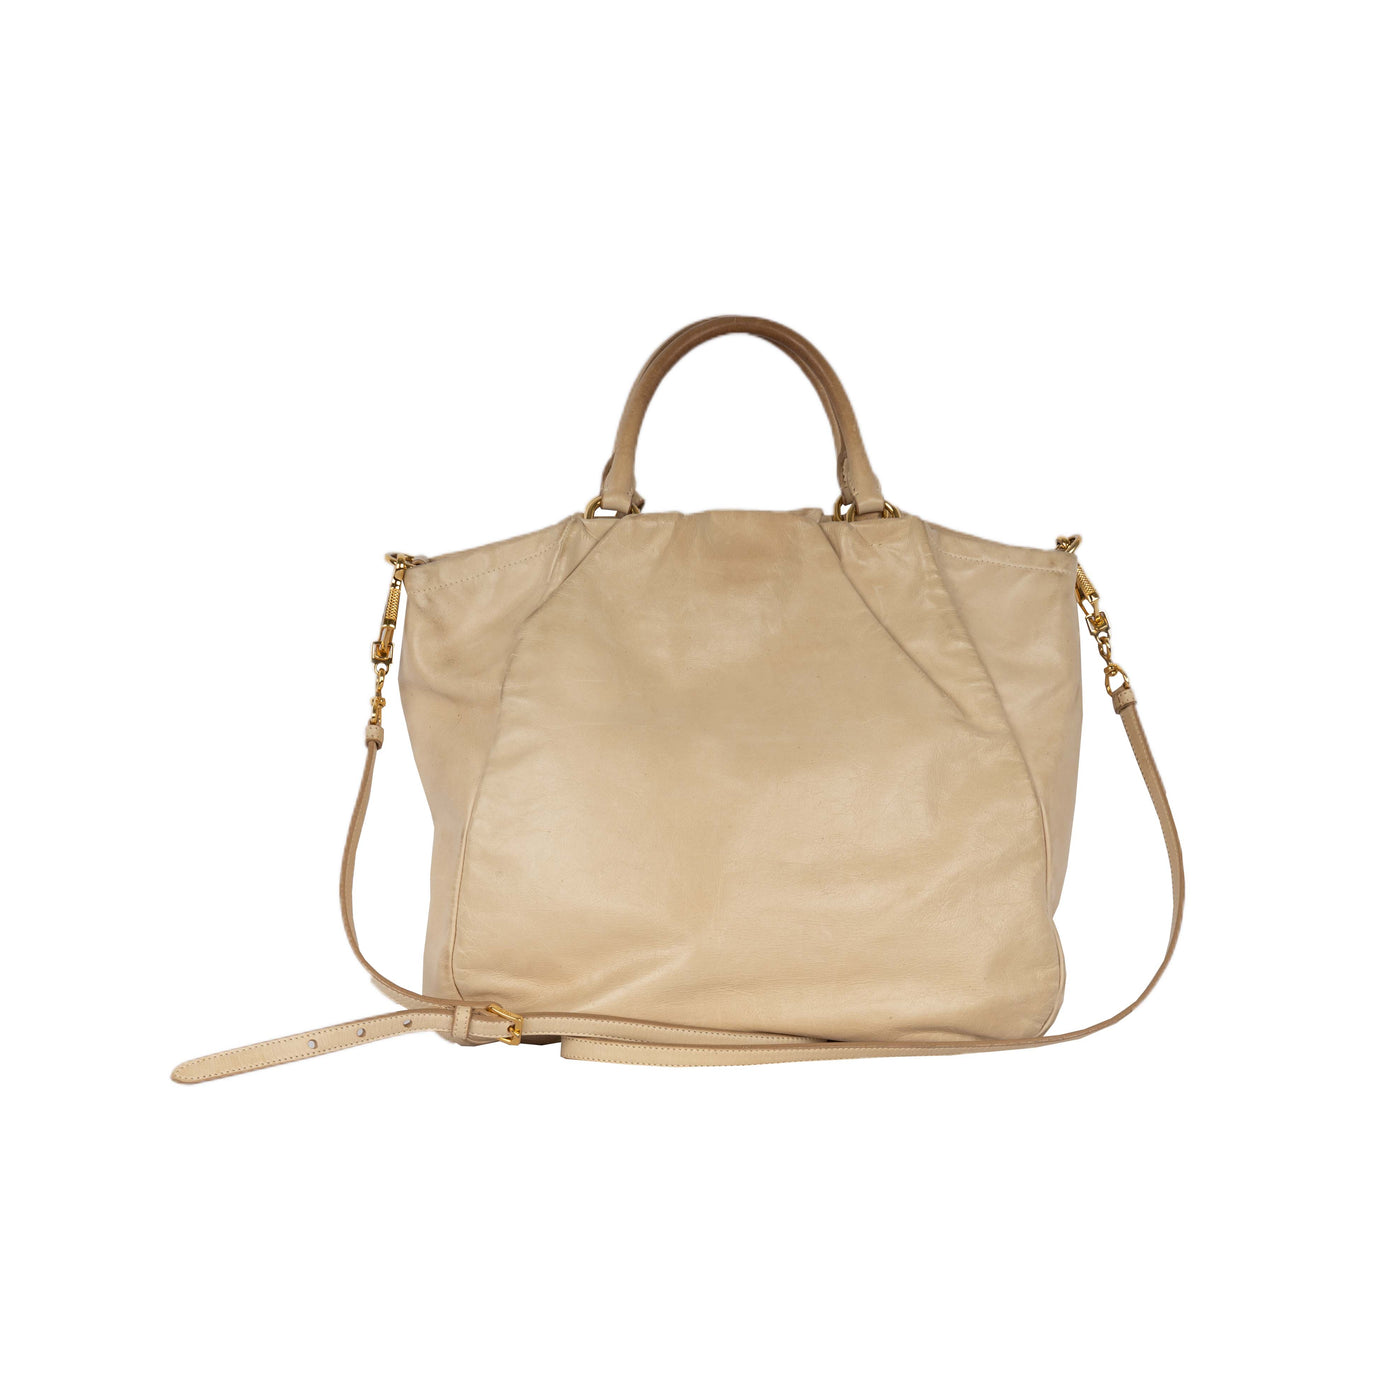 Secondhand Prada Beige Leather Hobo Handbag with Strap